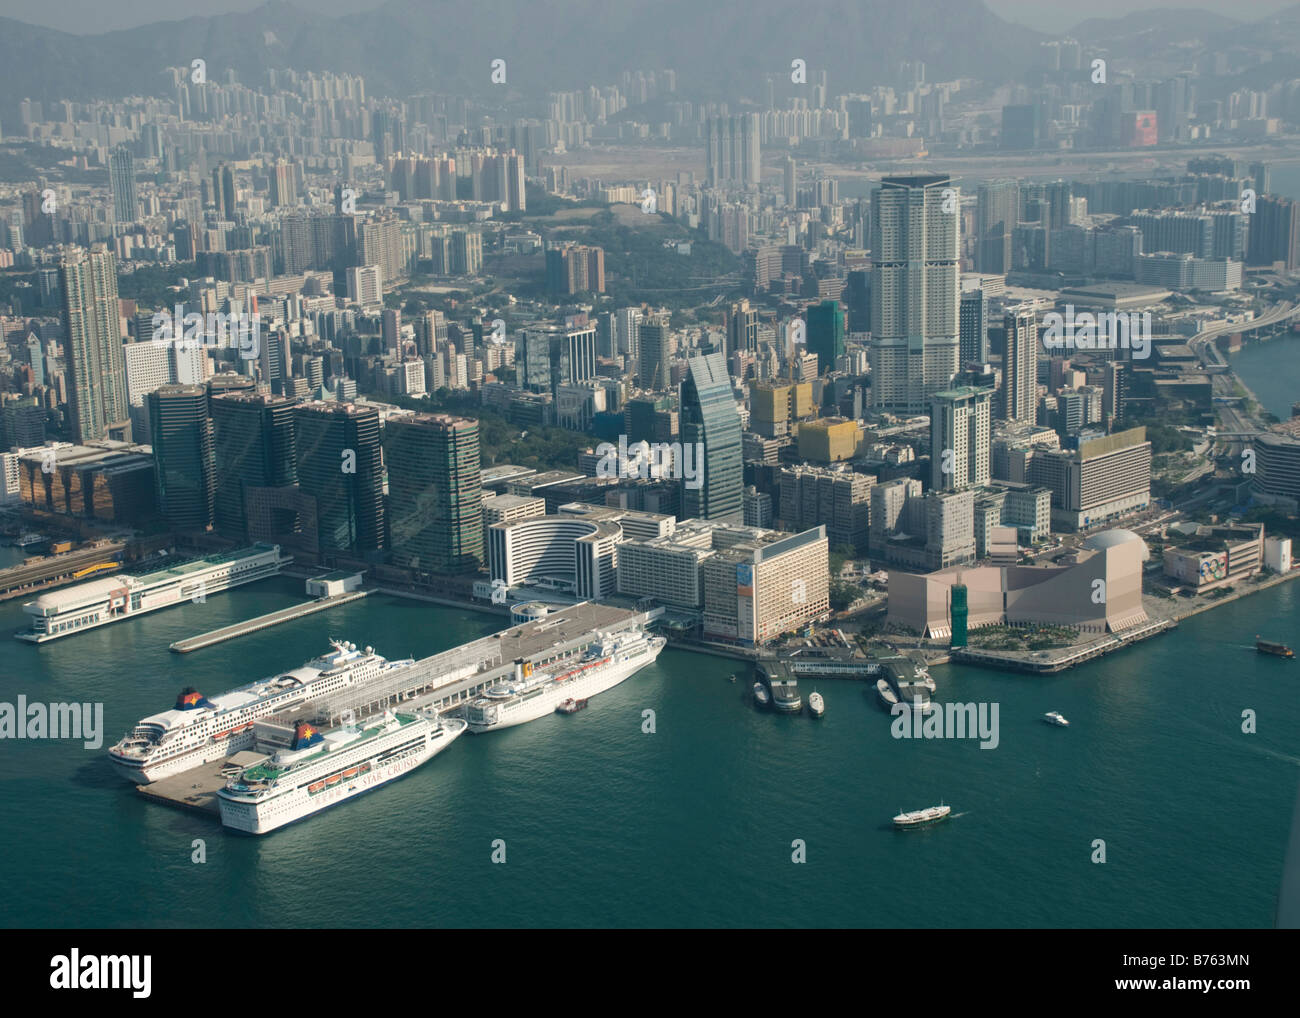 Ocean Terminal, Tsin Sha Tsui, Hong Kong Stock Photo - Alamy